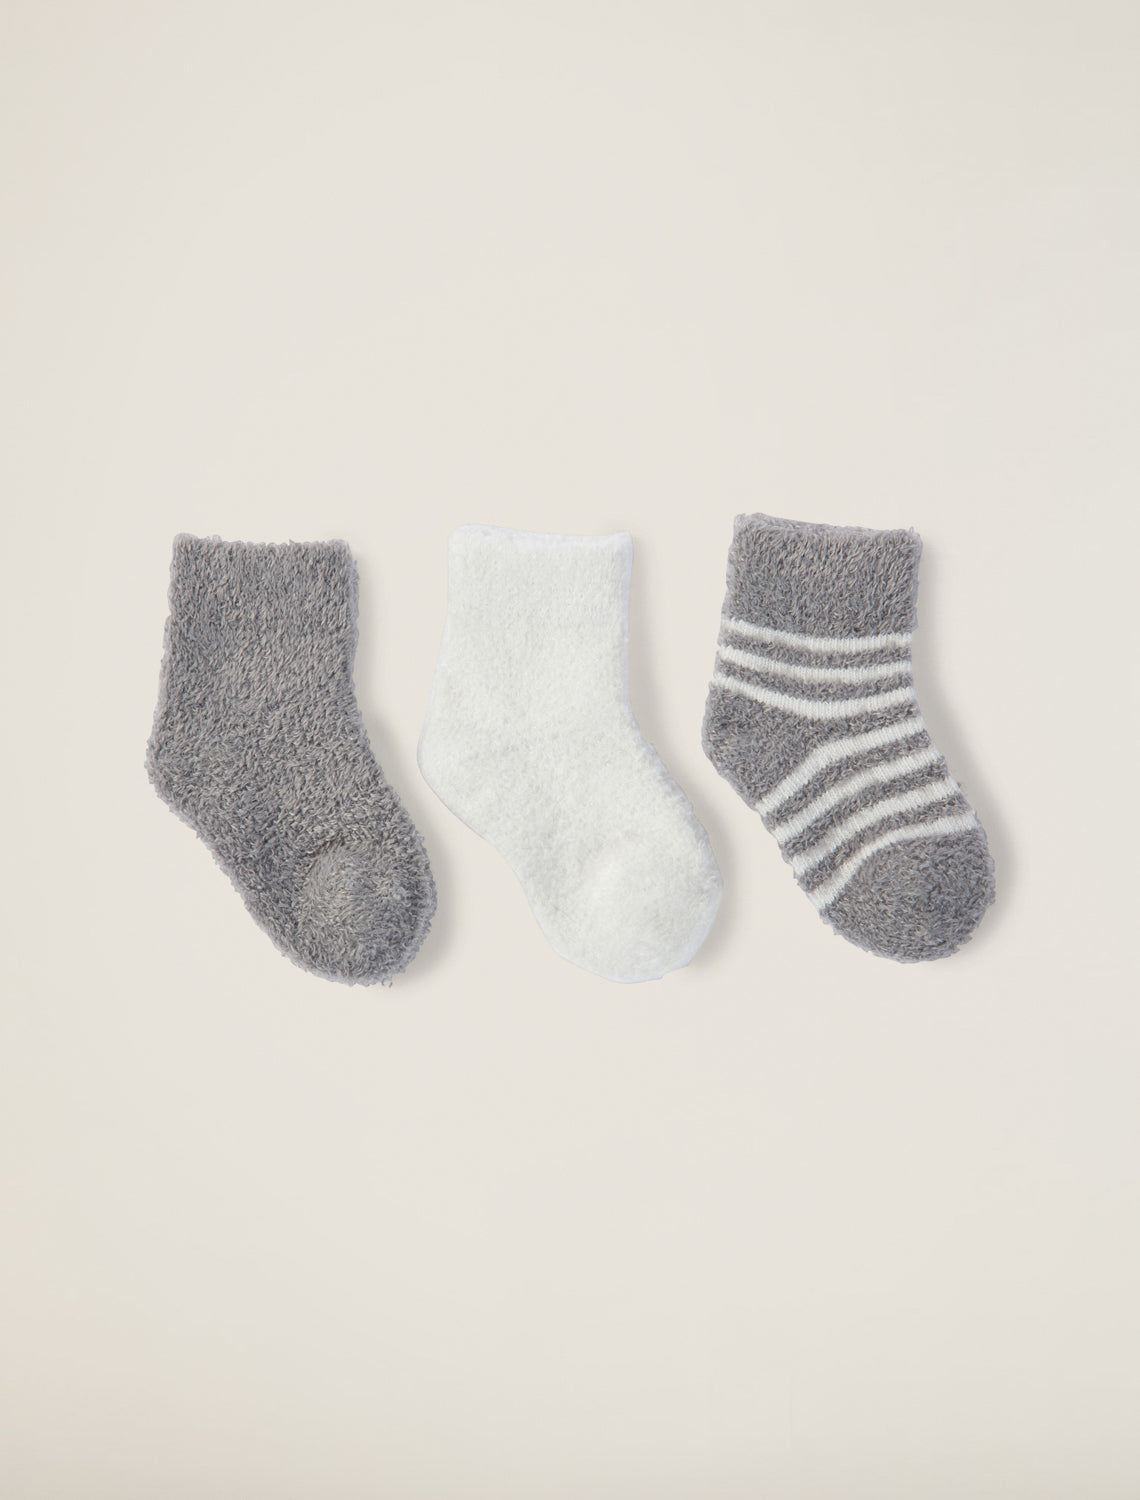 Cozychic Lite Infant Socks 3 Pack